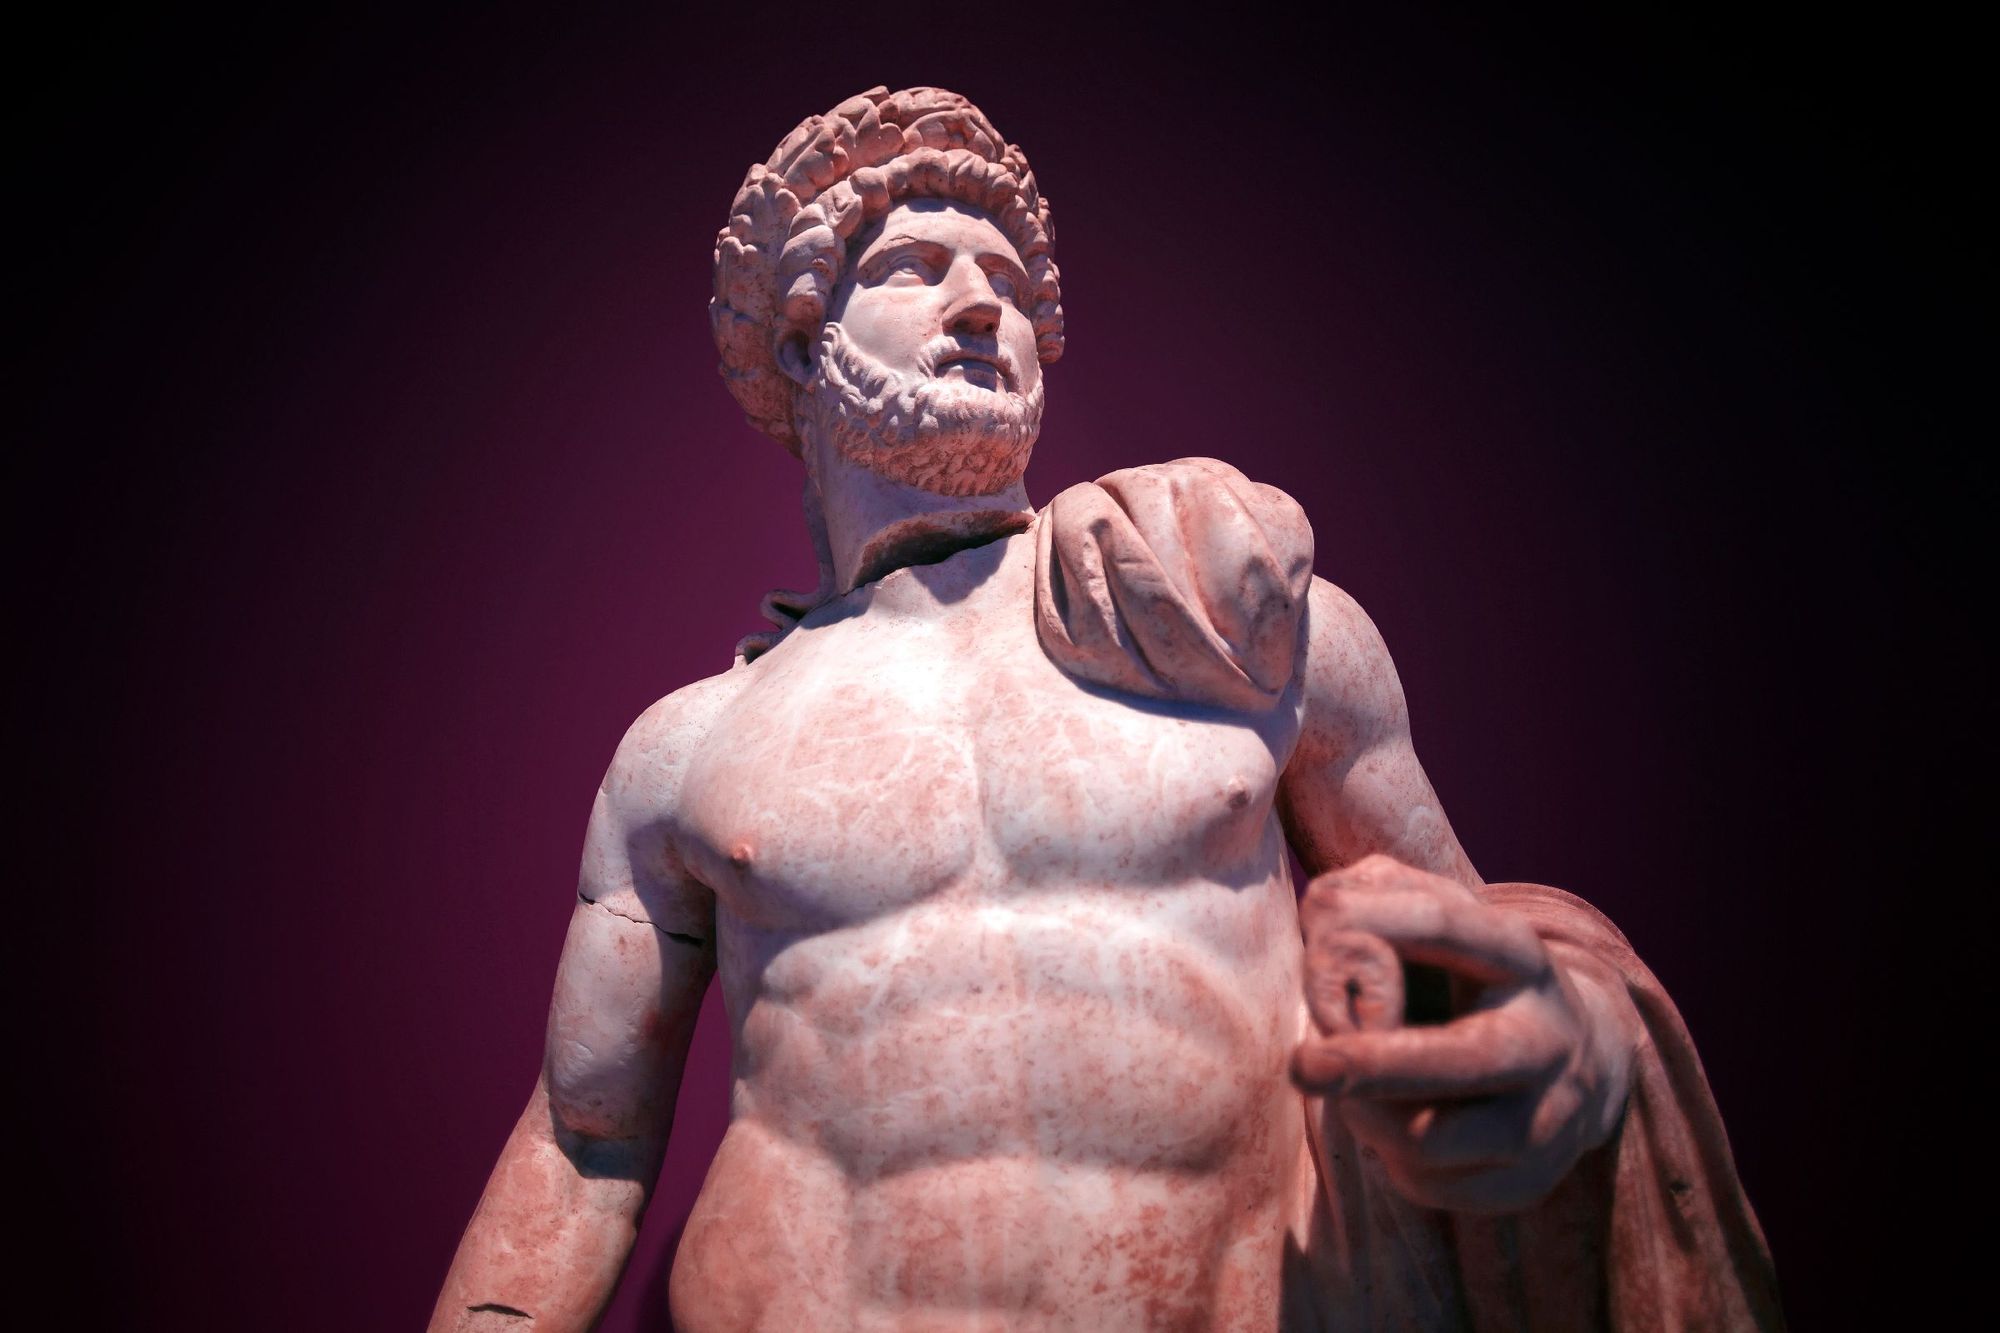 Statue of Hadrian